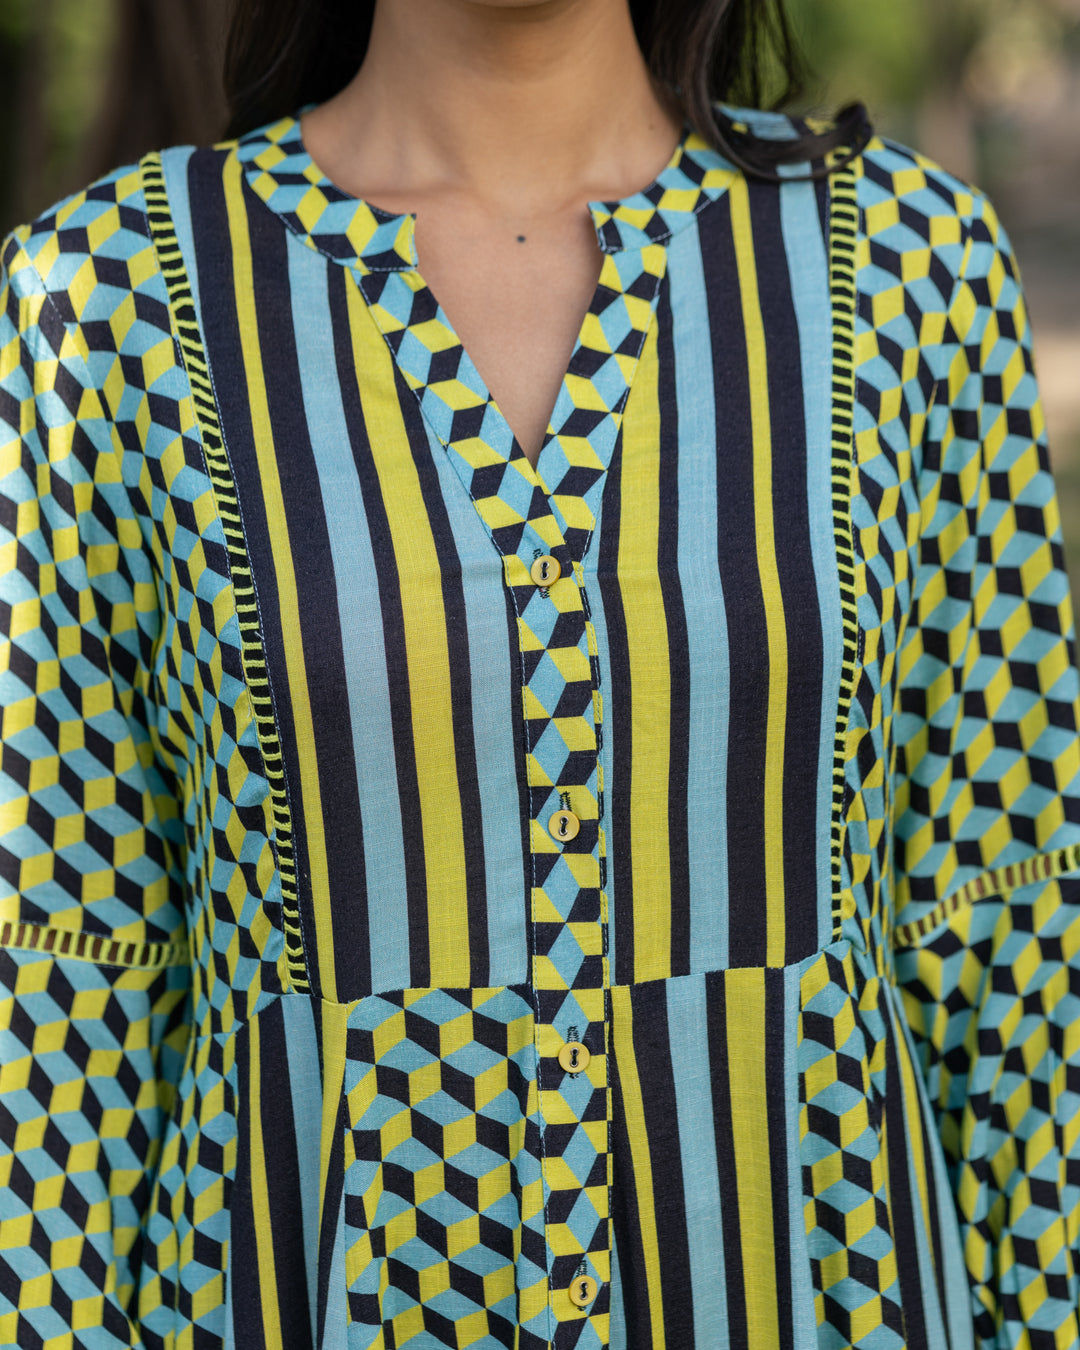 Neon Checkered & Stripe Dress